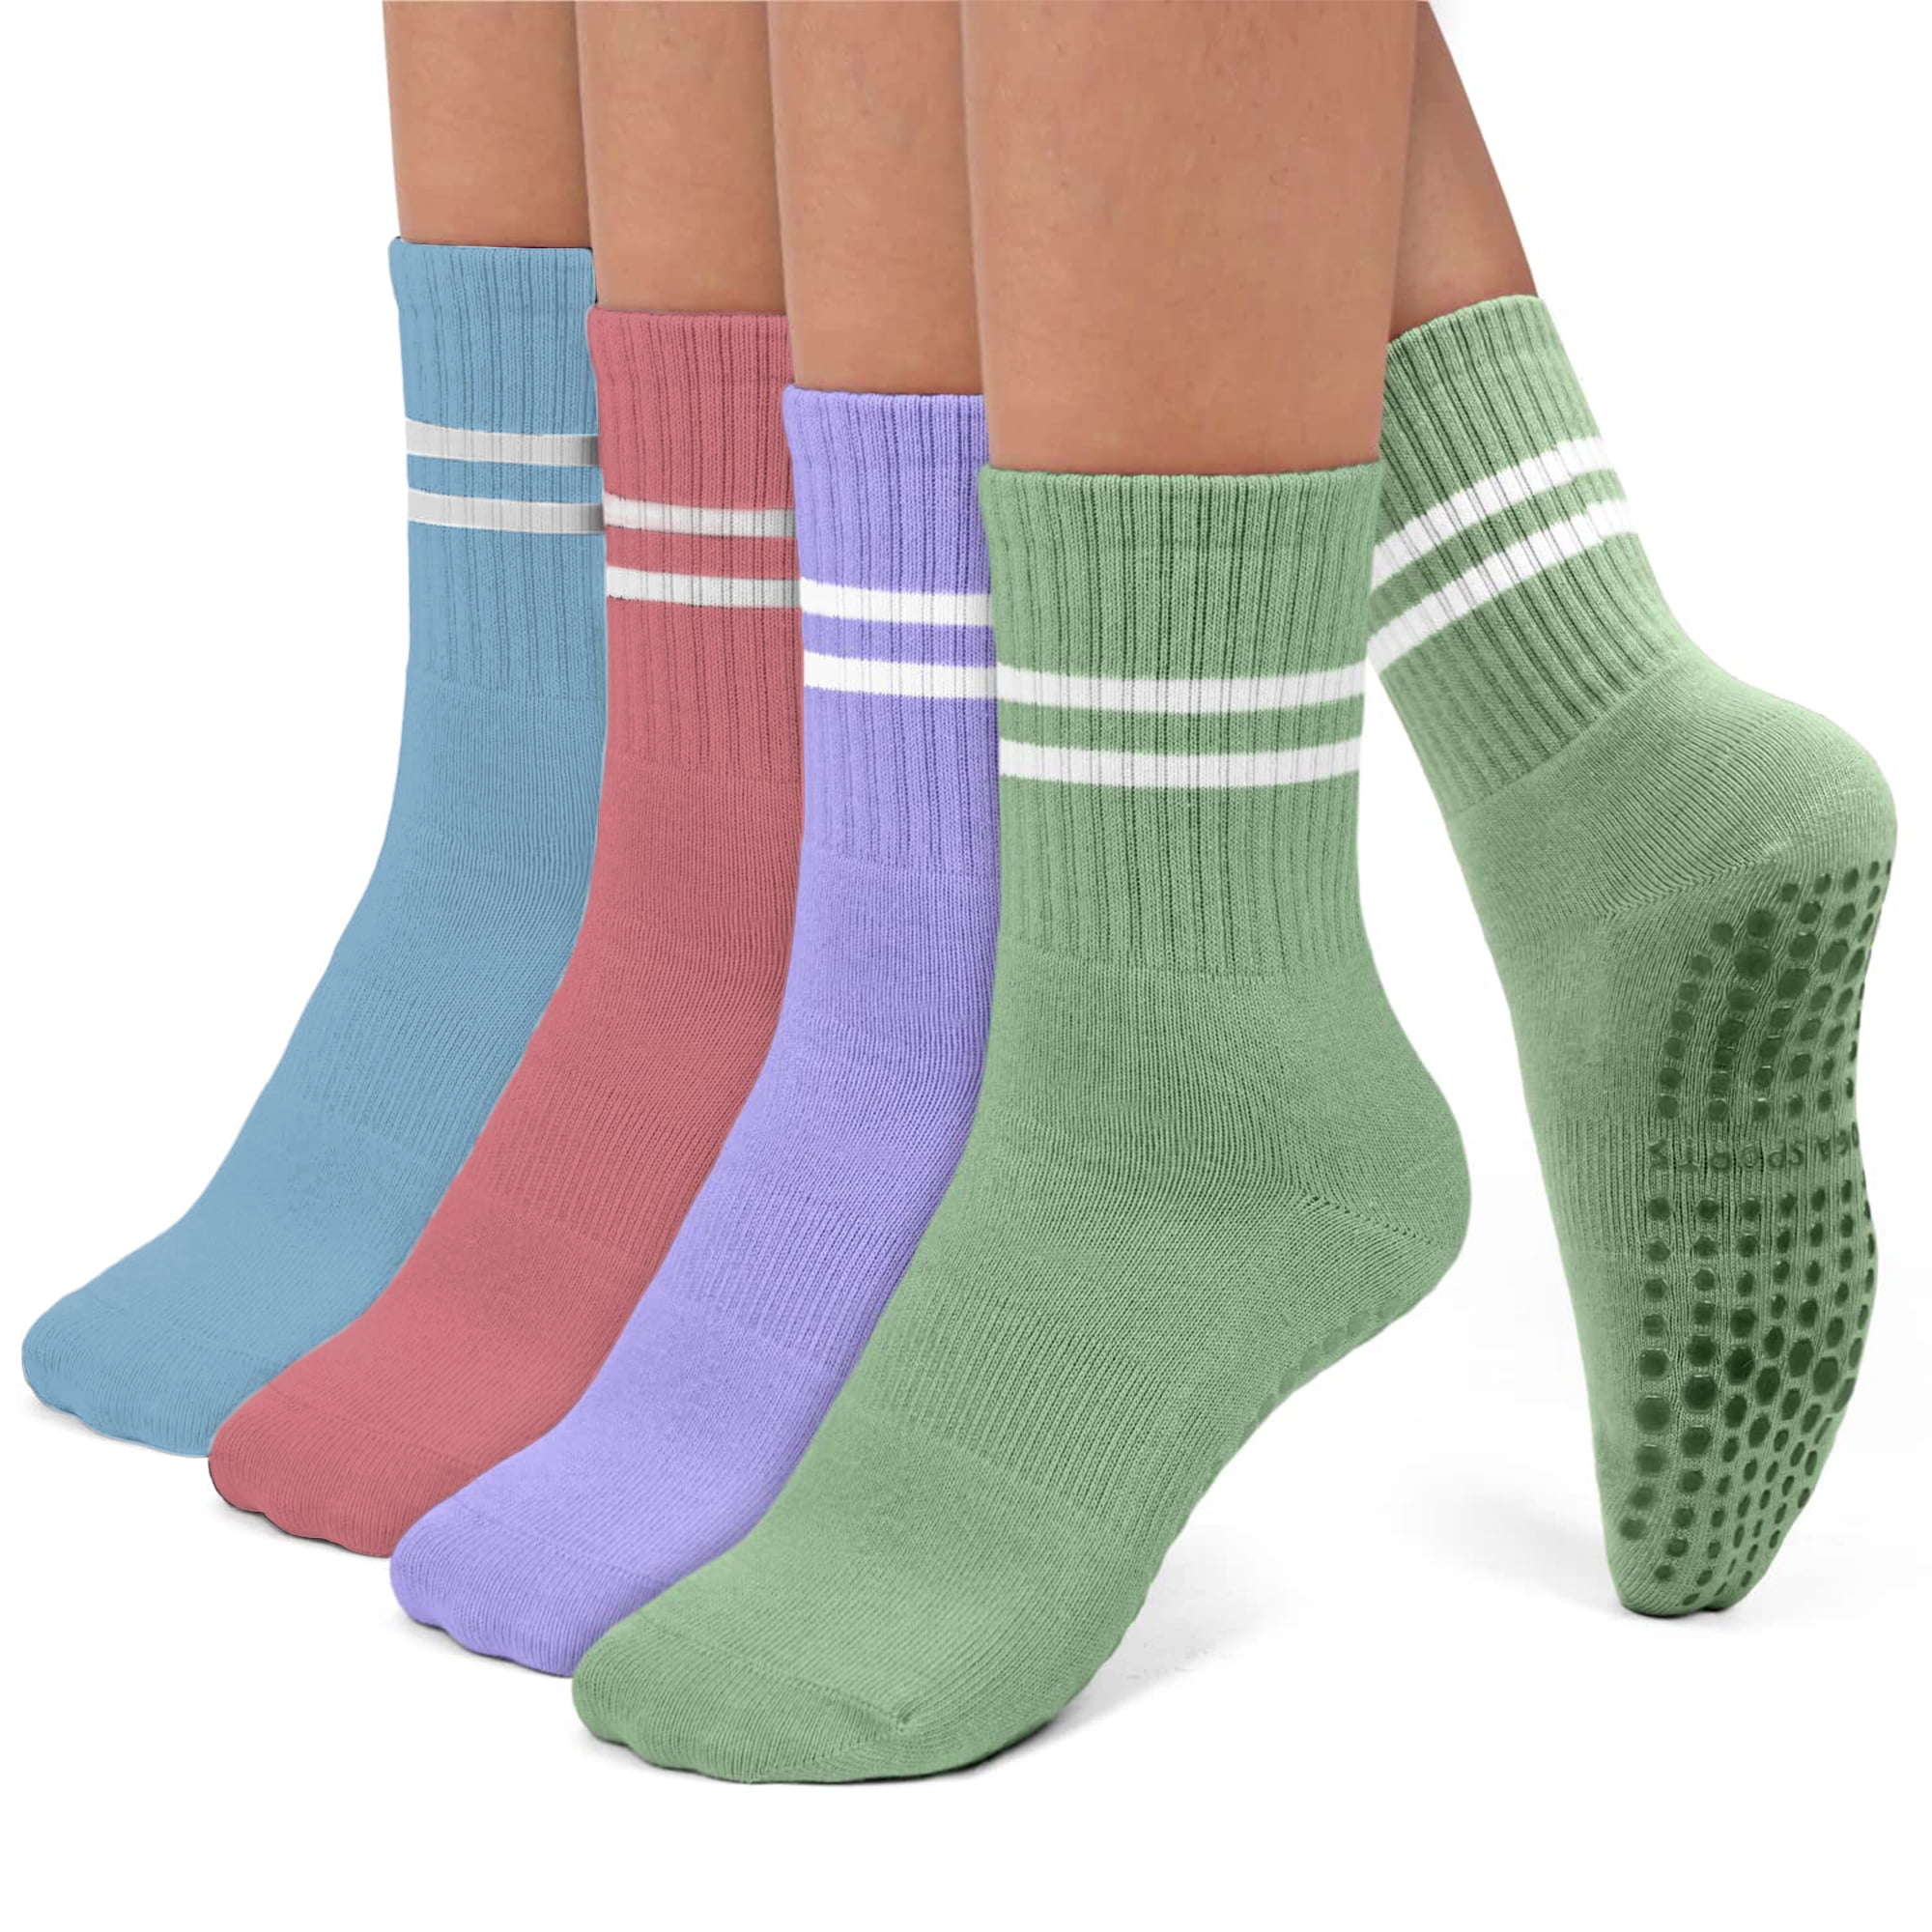 Yoga Socks - CVS Pharmacy